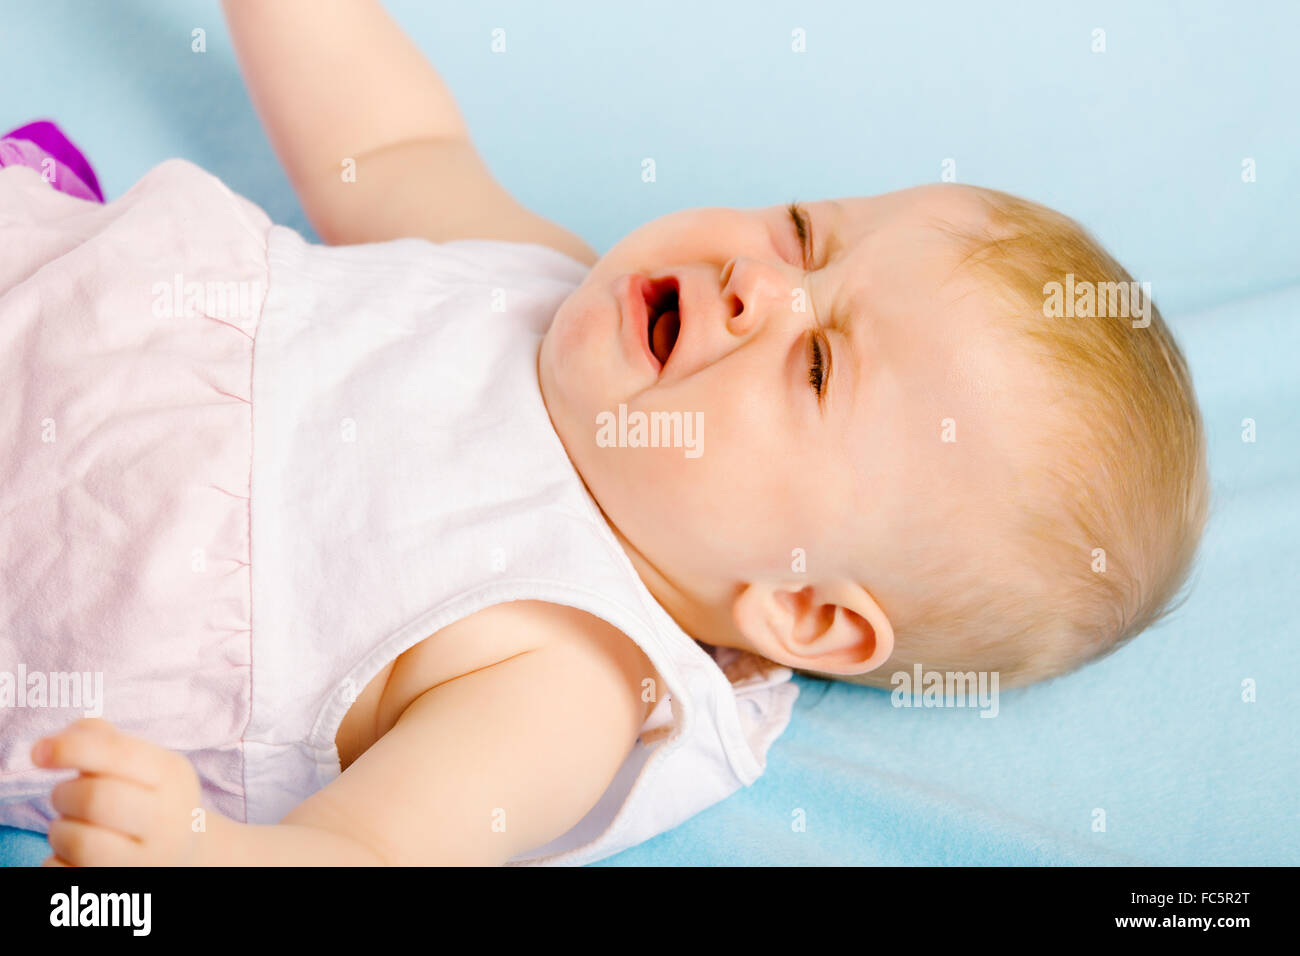 Crying baby lying on plaid Stock Photo